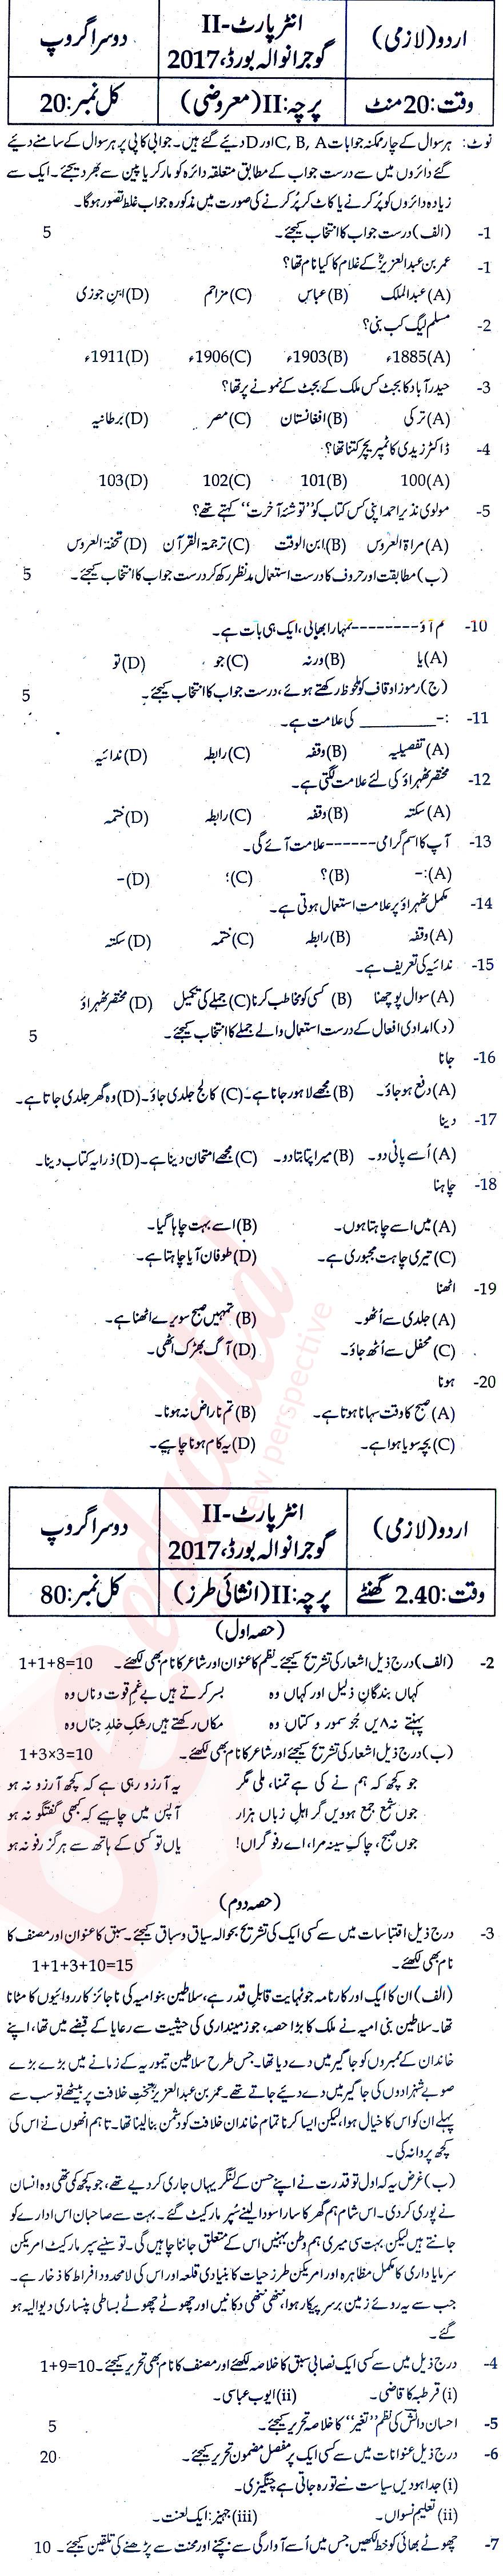 Urdu 12th class Past Paper Group 2 BISE Gujranwala 2017